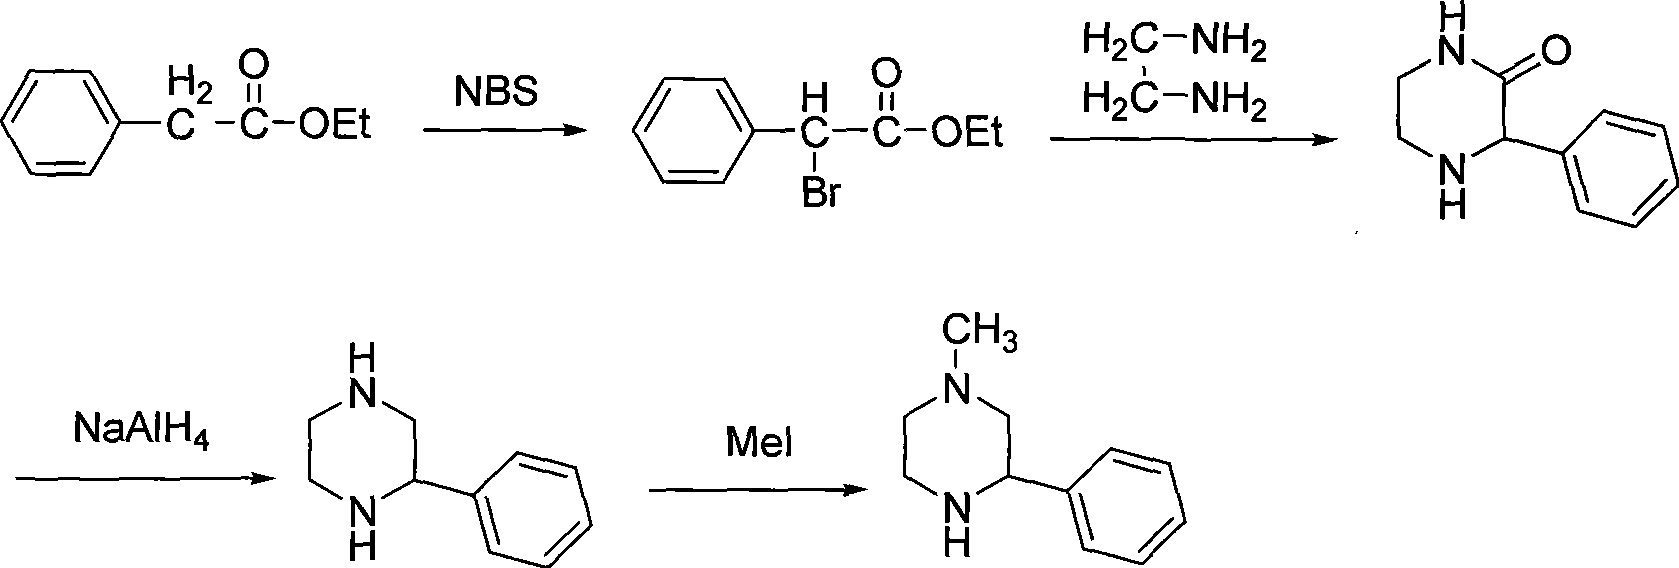 Preparation of medicament intermediate 1-methyl-3-phenyl piperazine